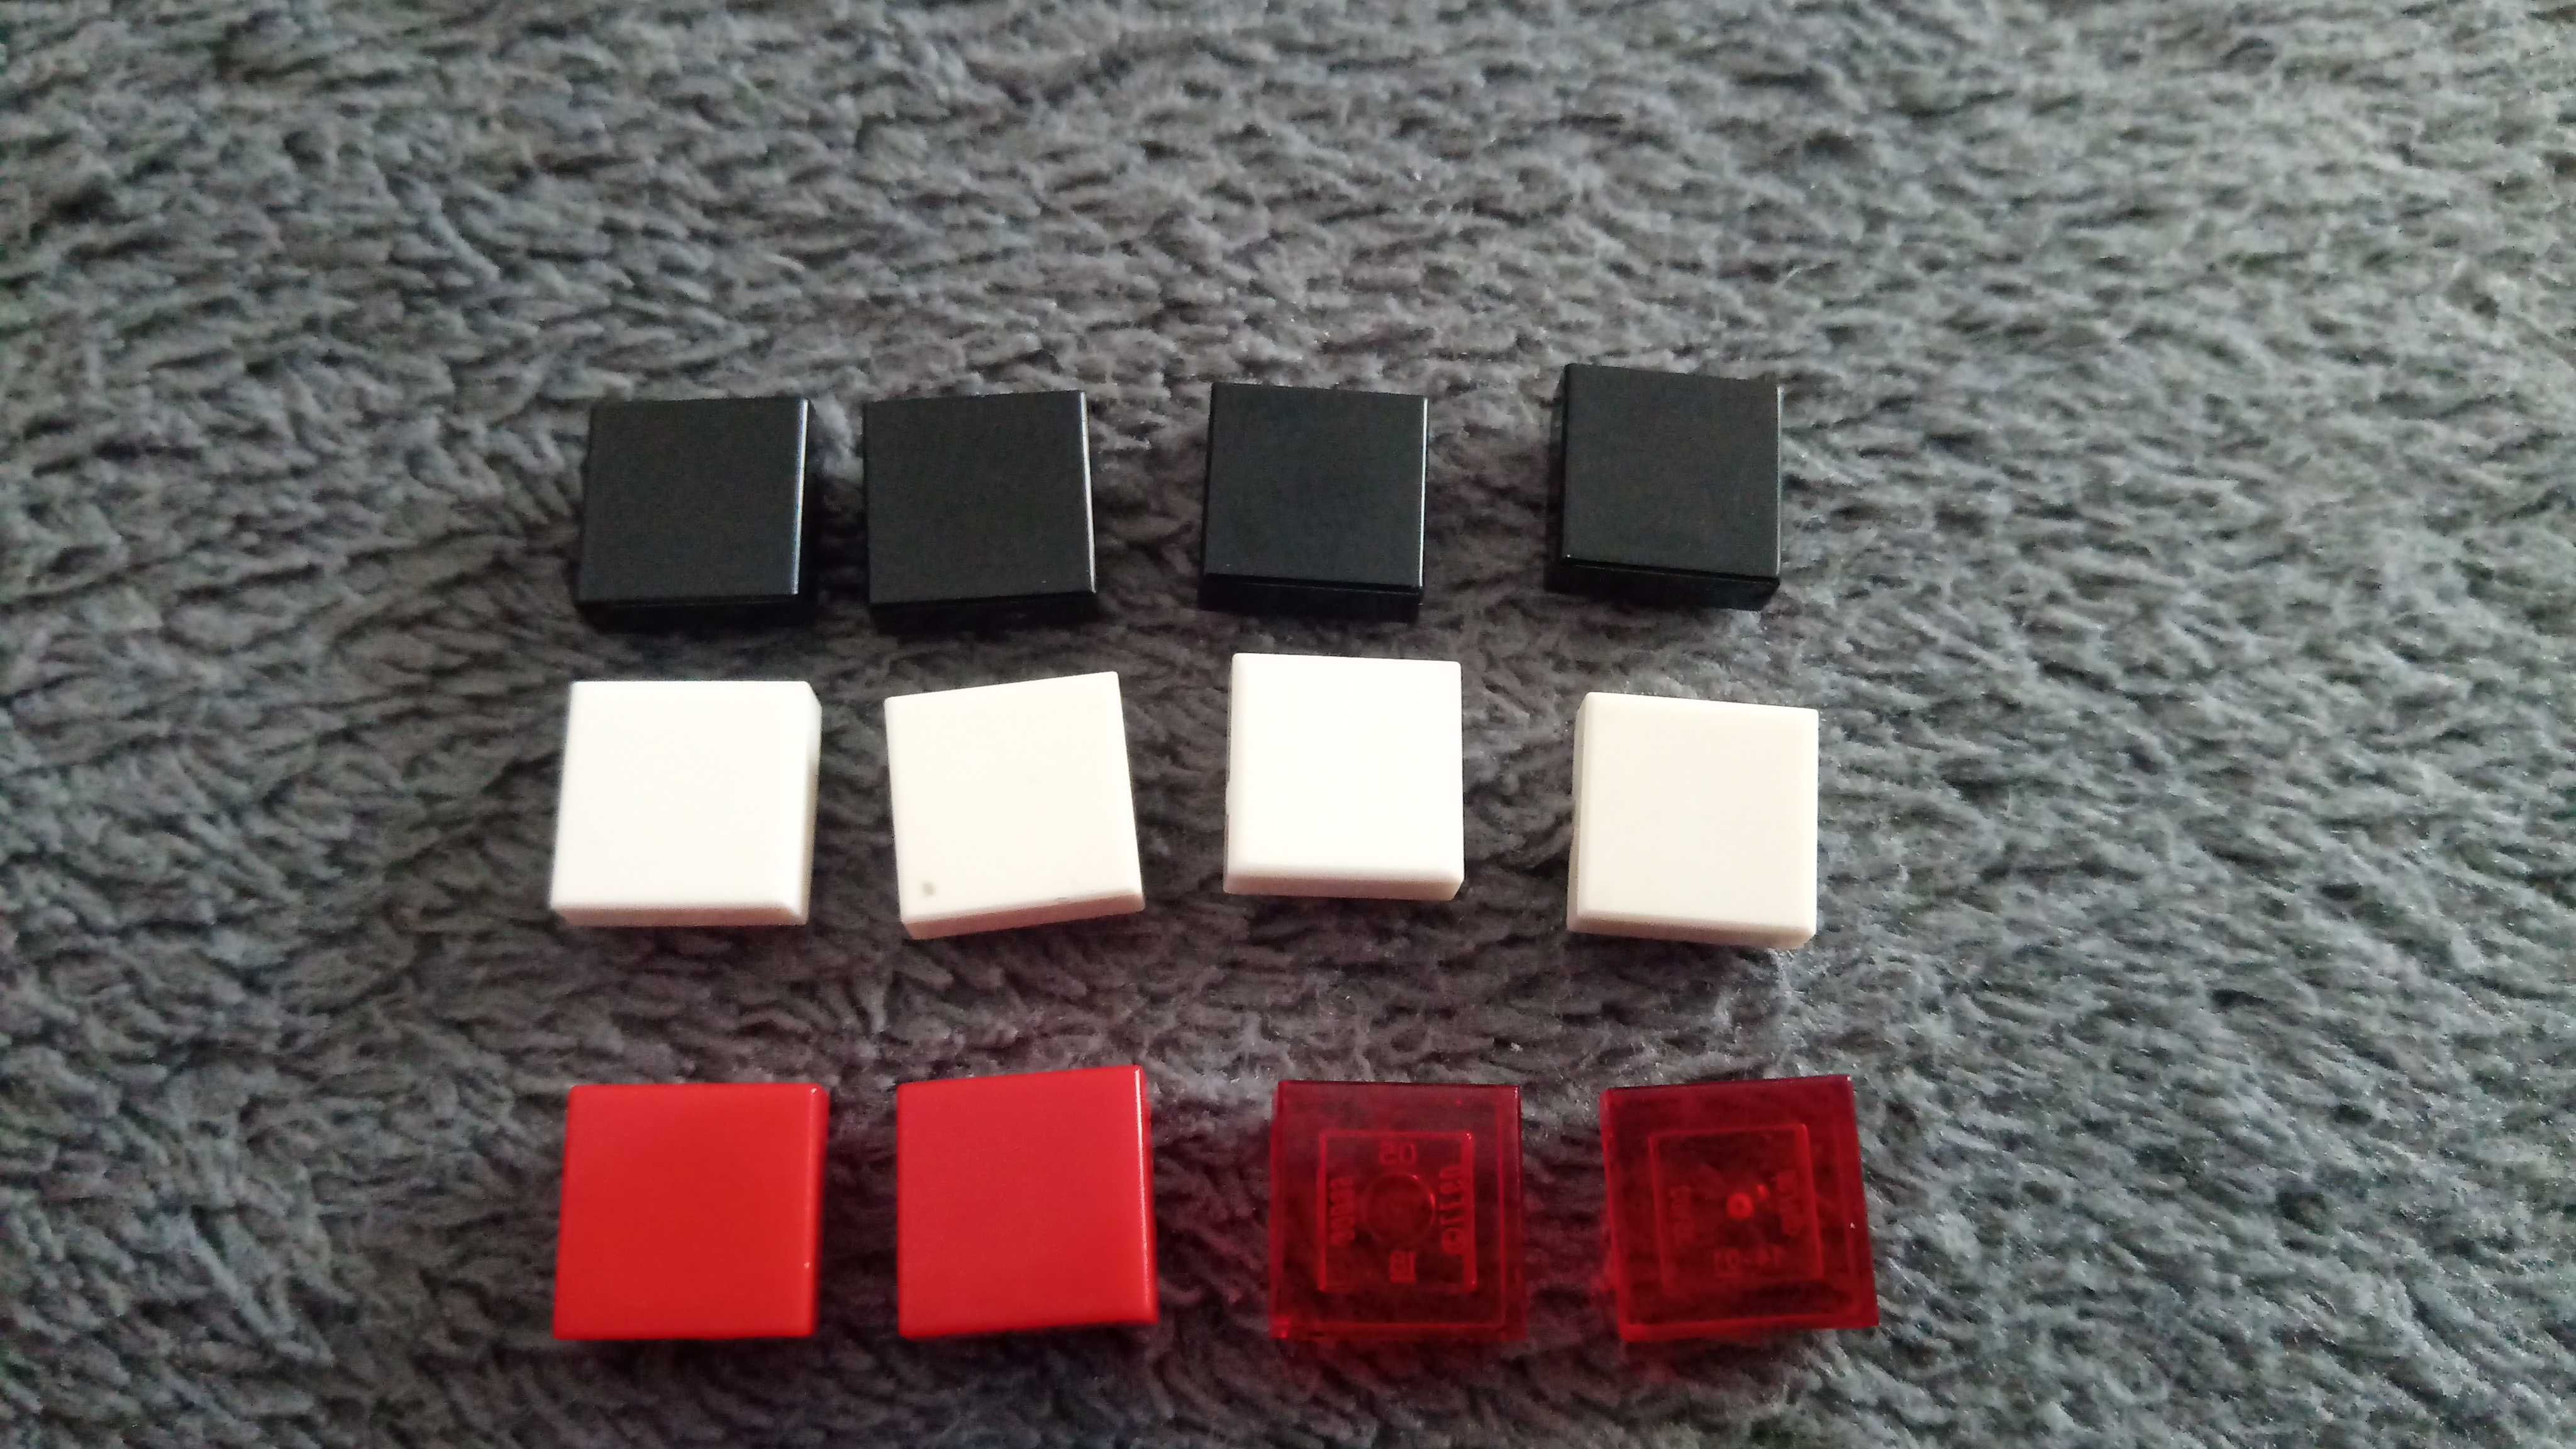 LEGO Płytka gładka 1x1 kwadrat kwadratowa mix 20 szt 20szt